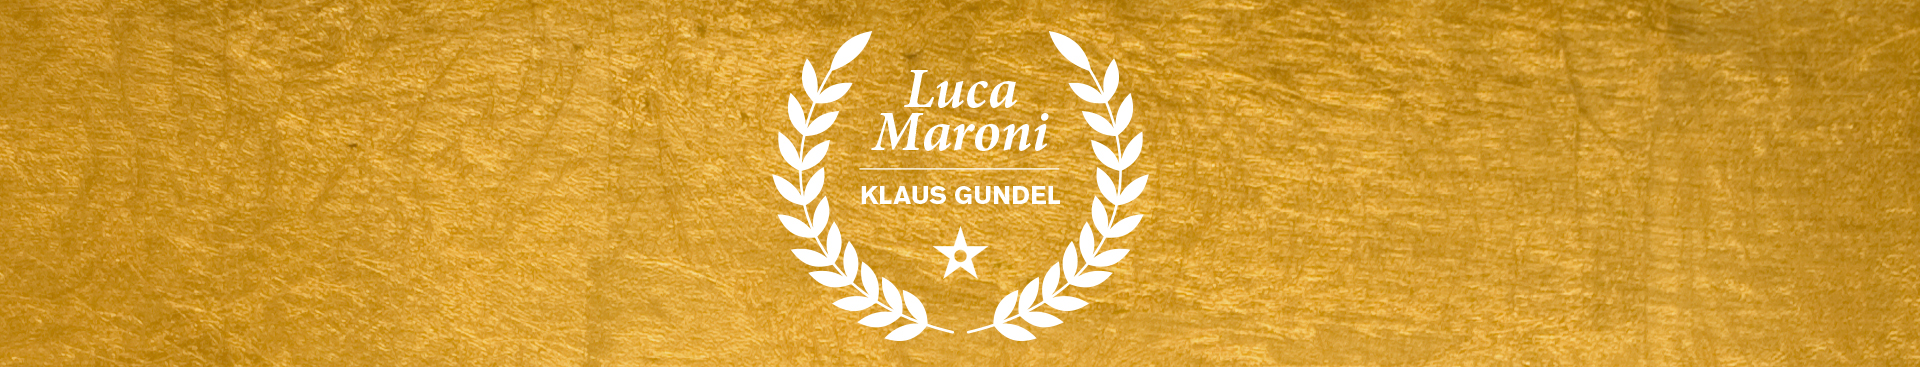 Klausgundel_Karte_Lucca-Maroni_banner_Bewertungen